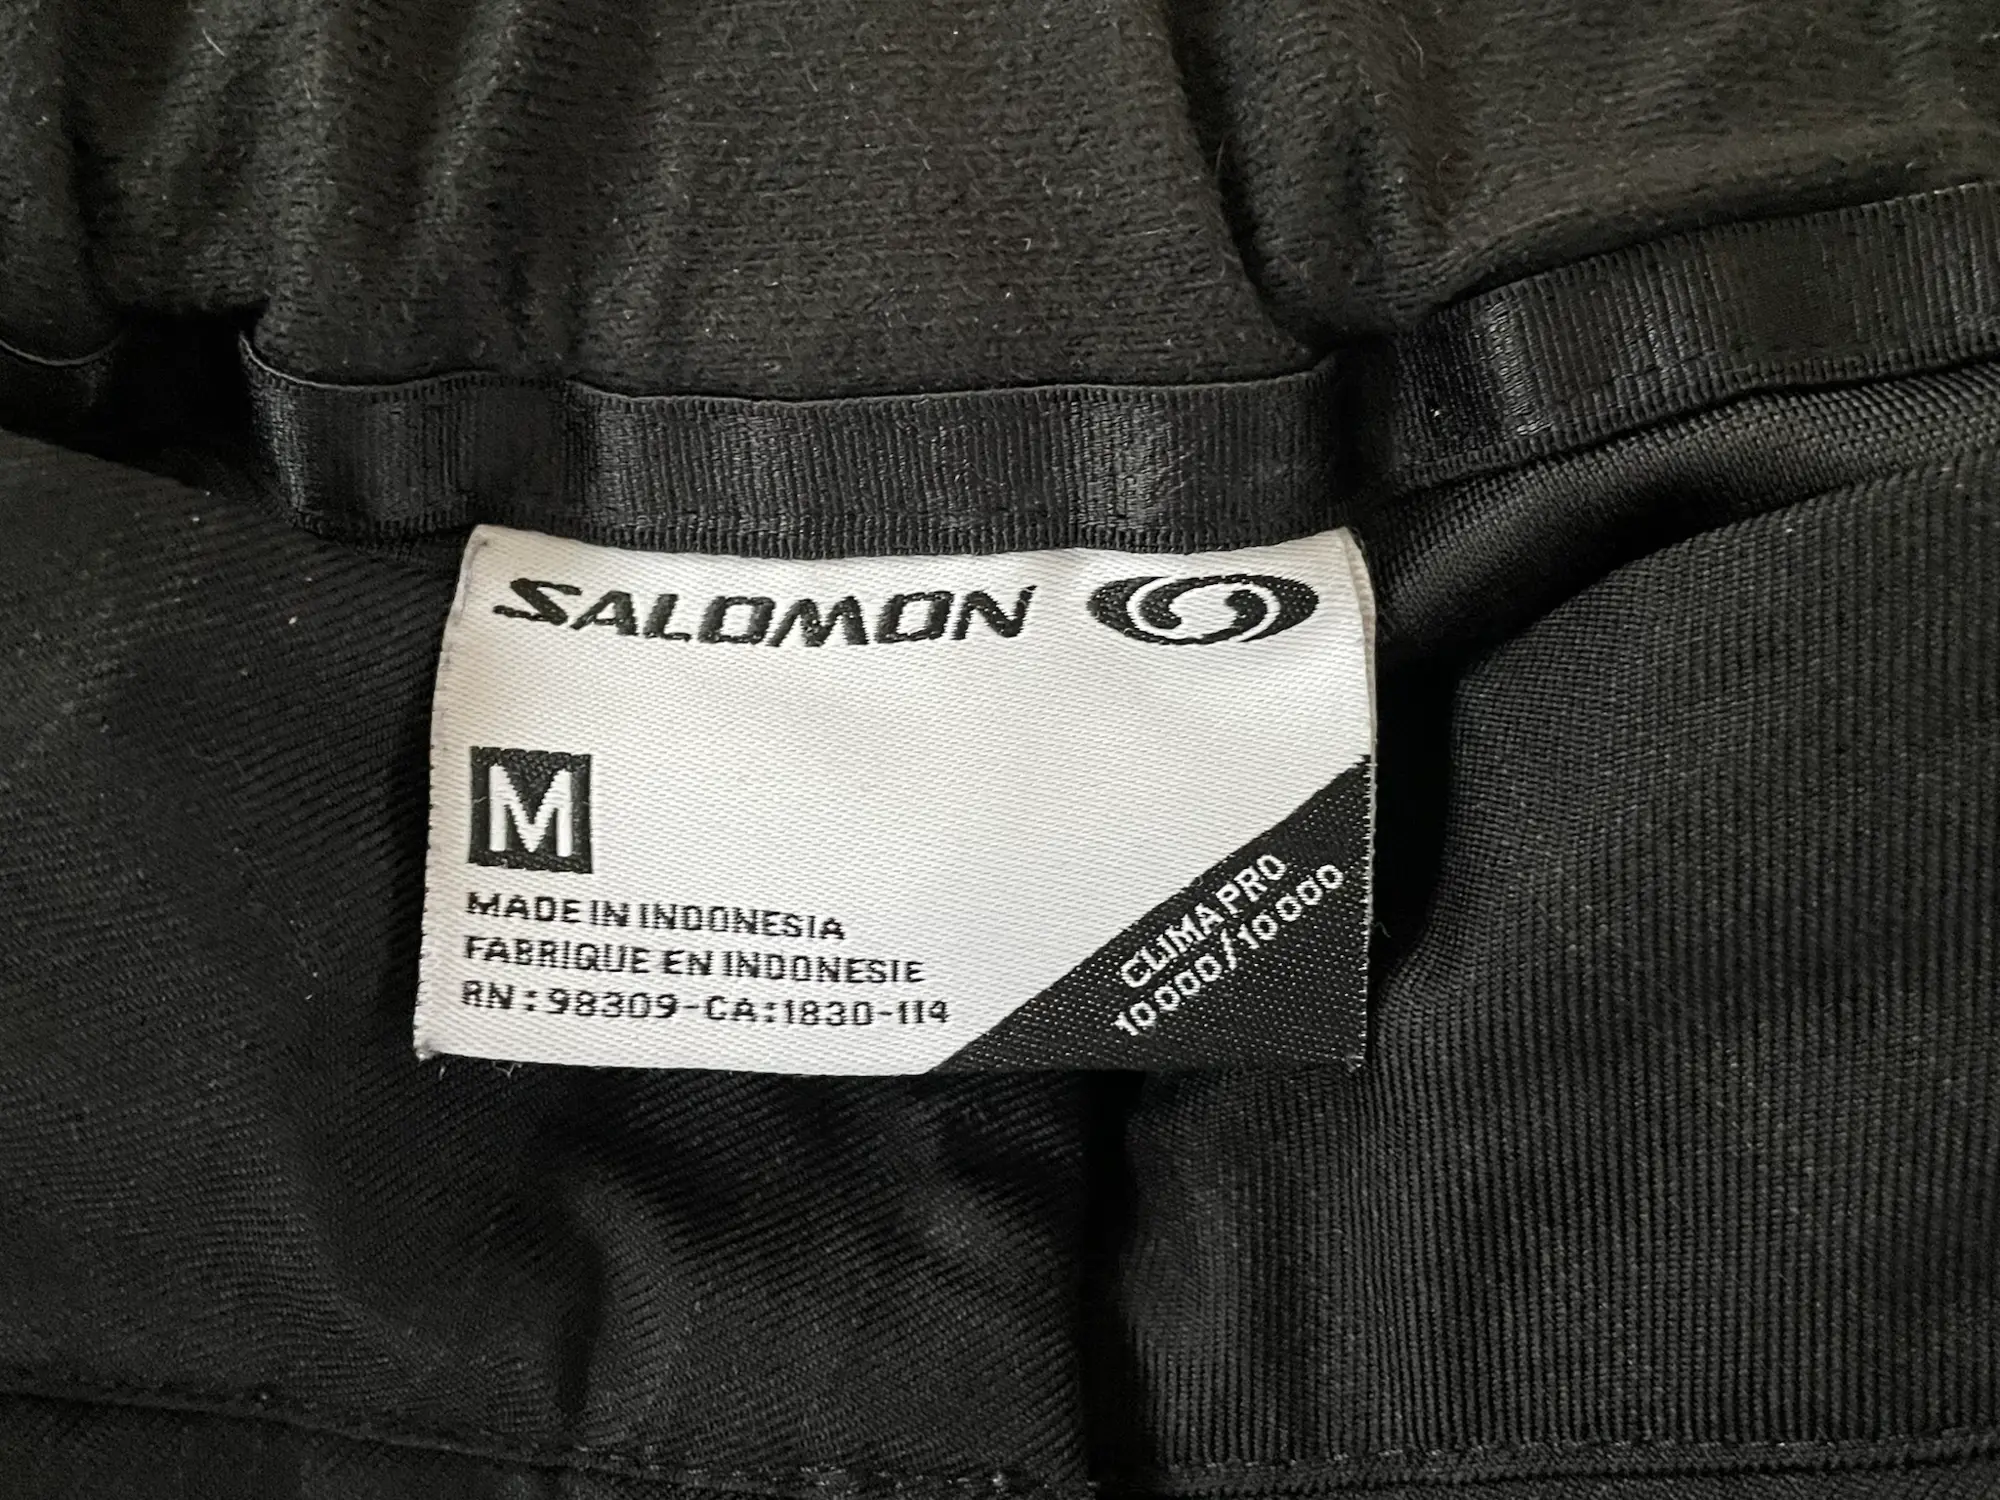 Salomon skitøj